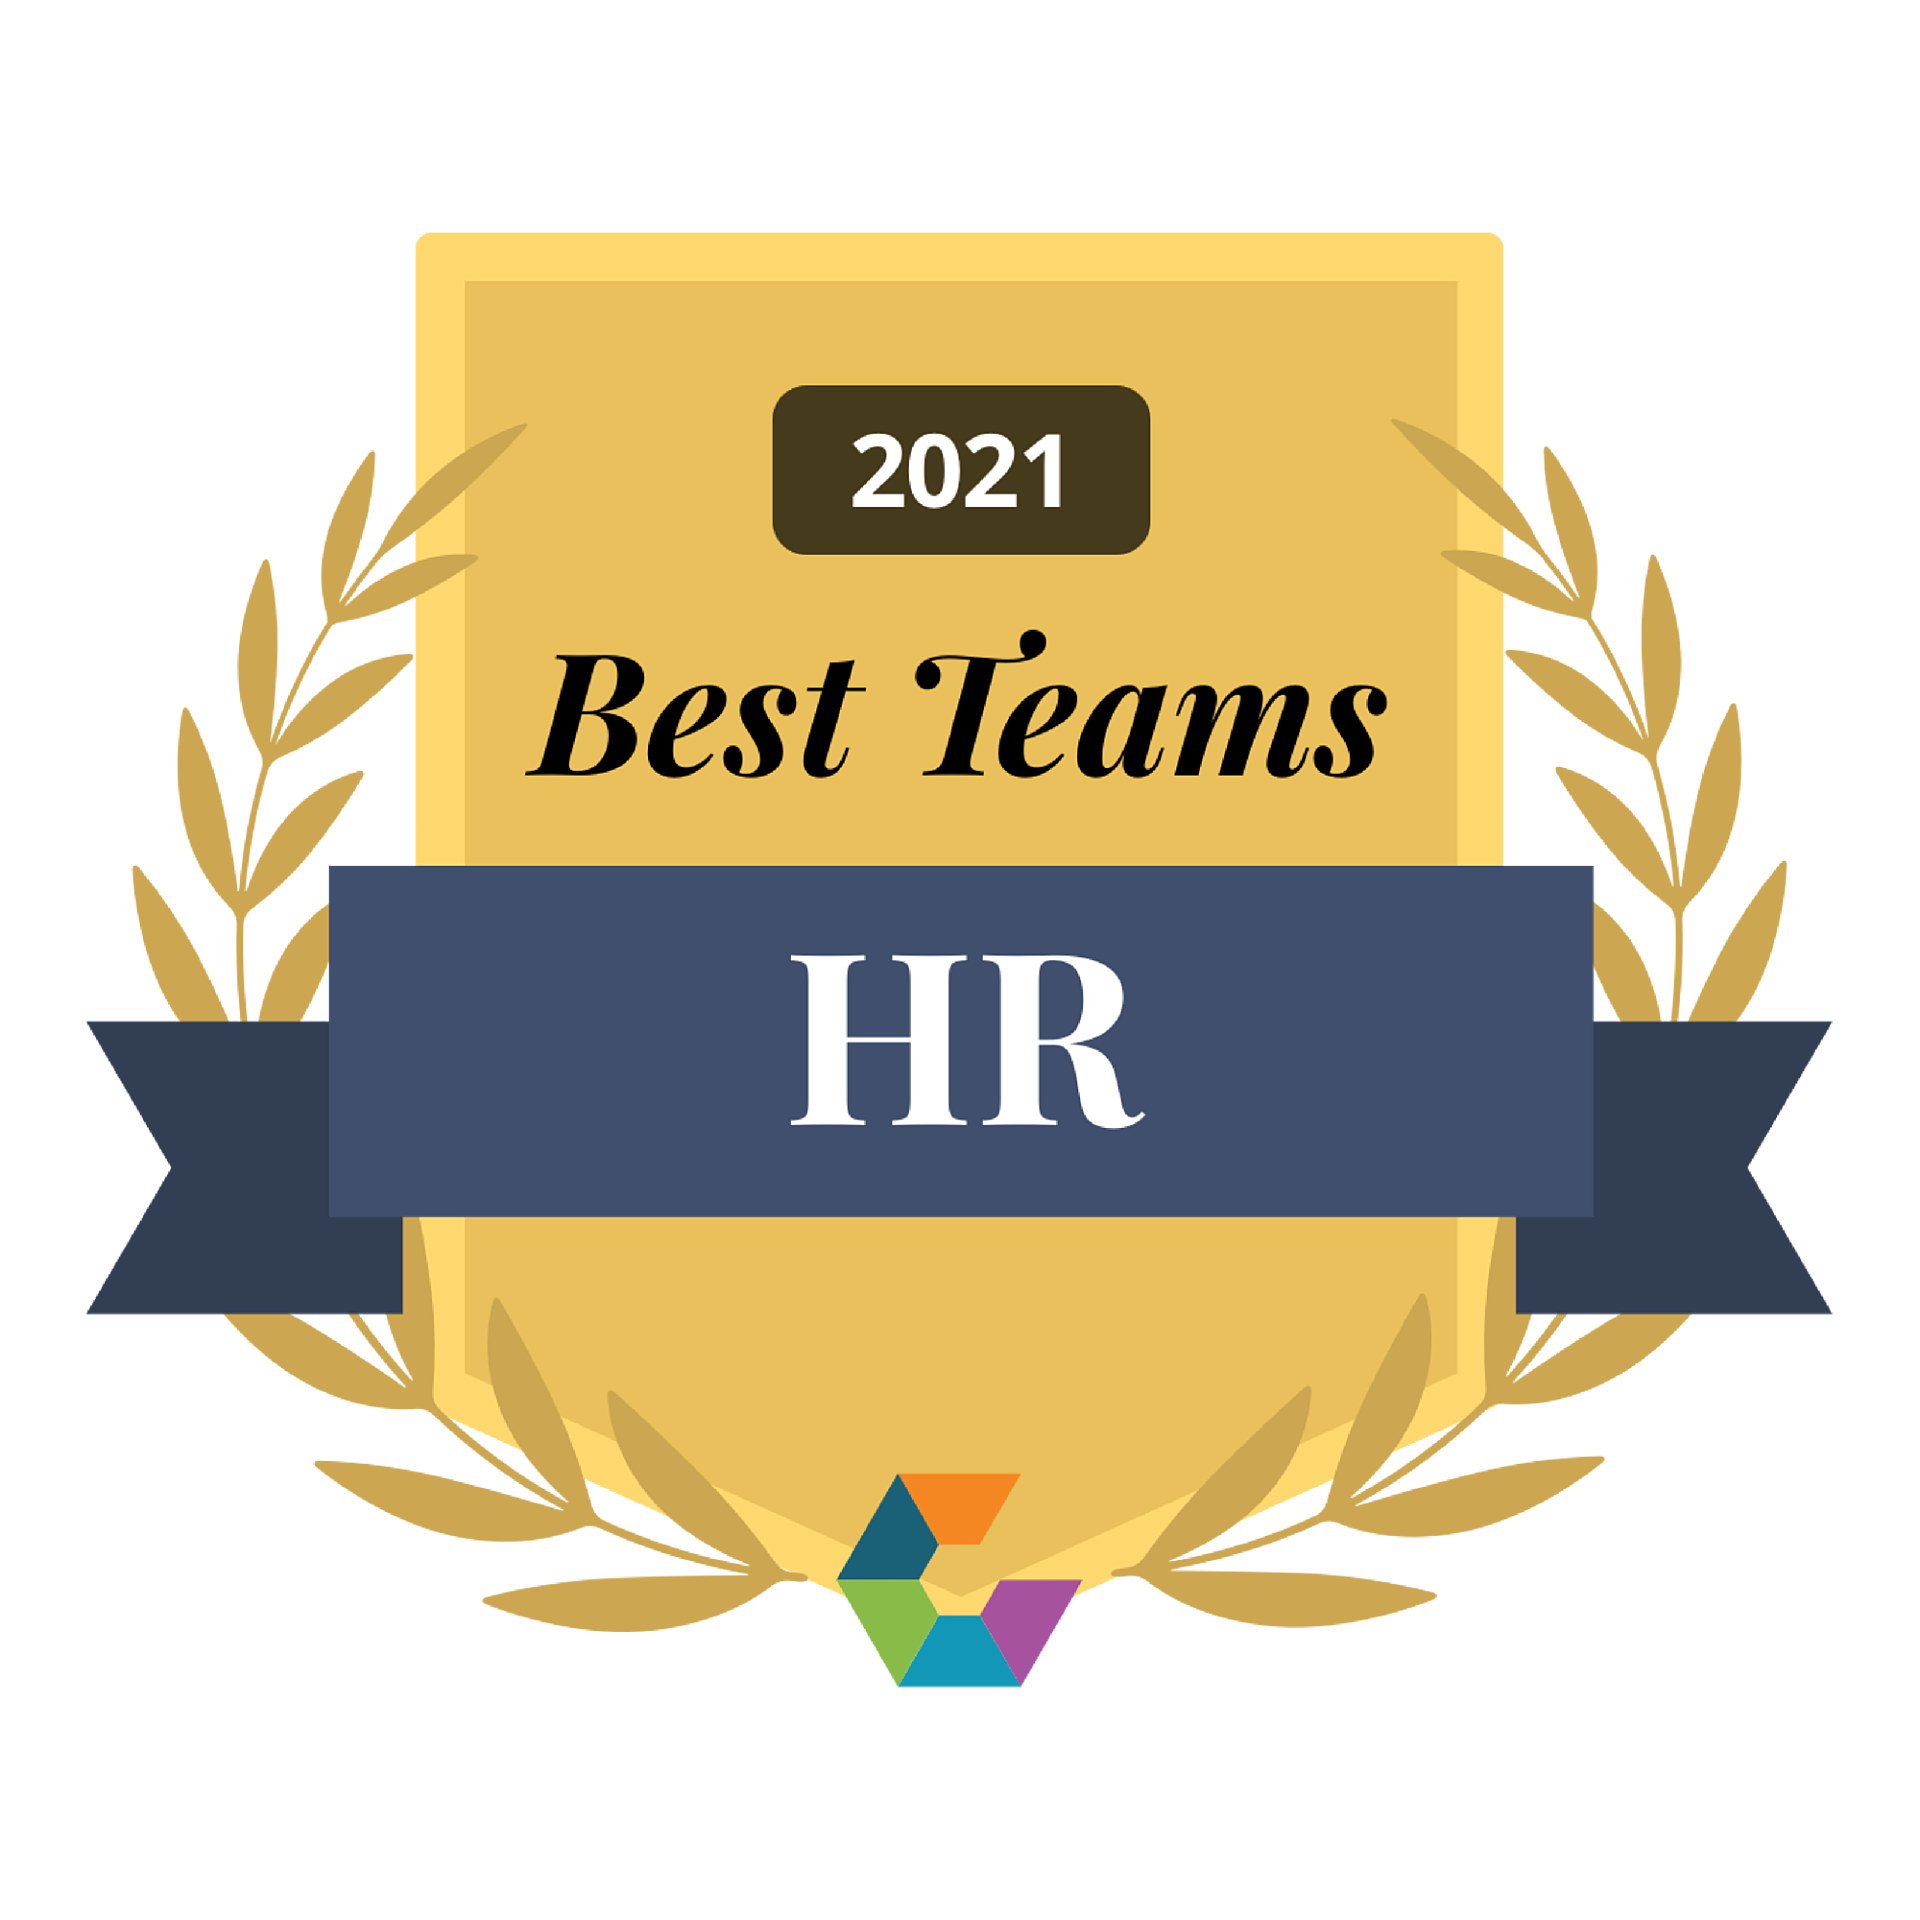 Comparably Award Best Teams HR